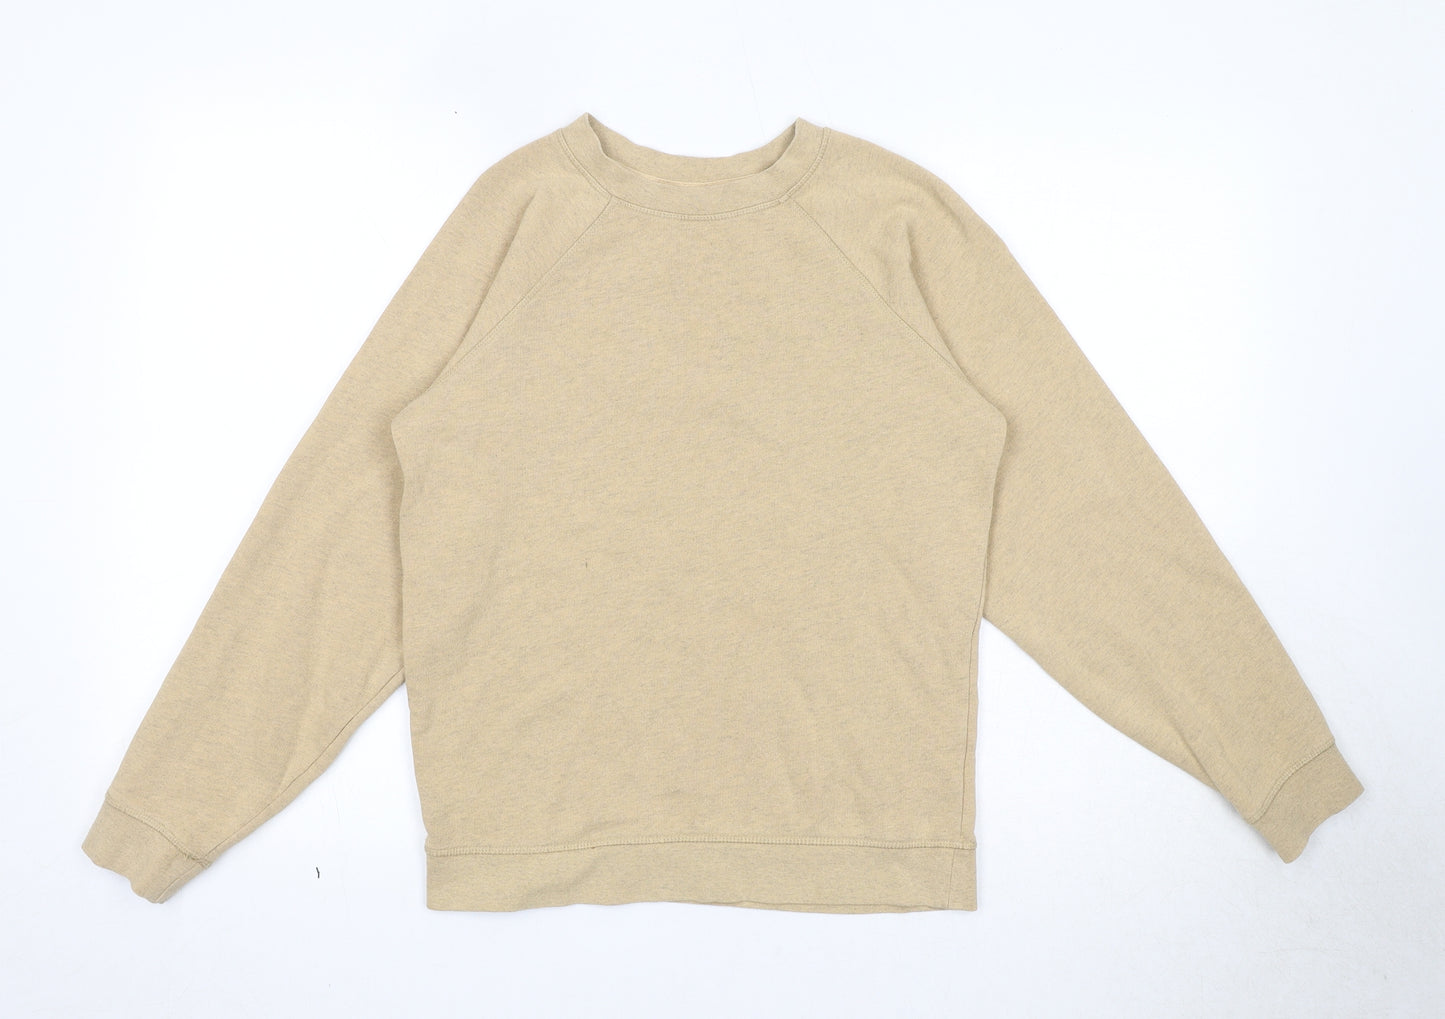 Topshop Womens Beige Cotton Pullover Sweatshirt Size 4 Pullover